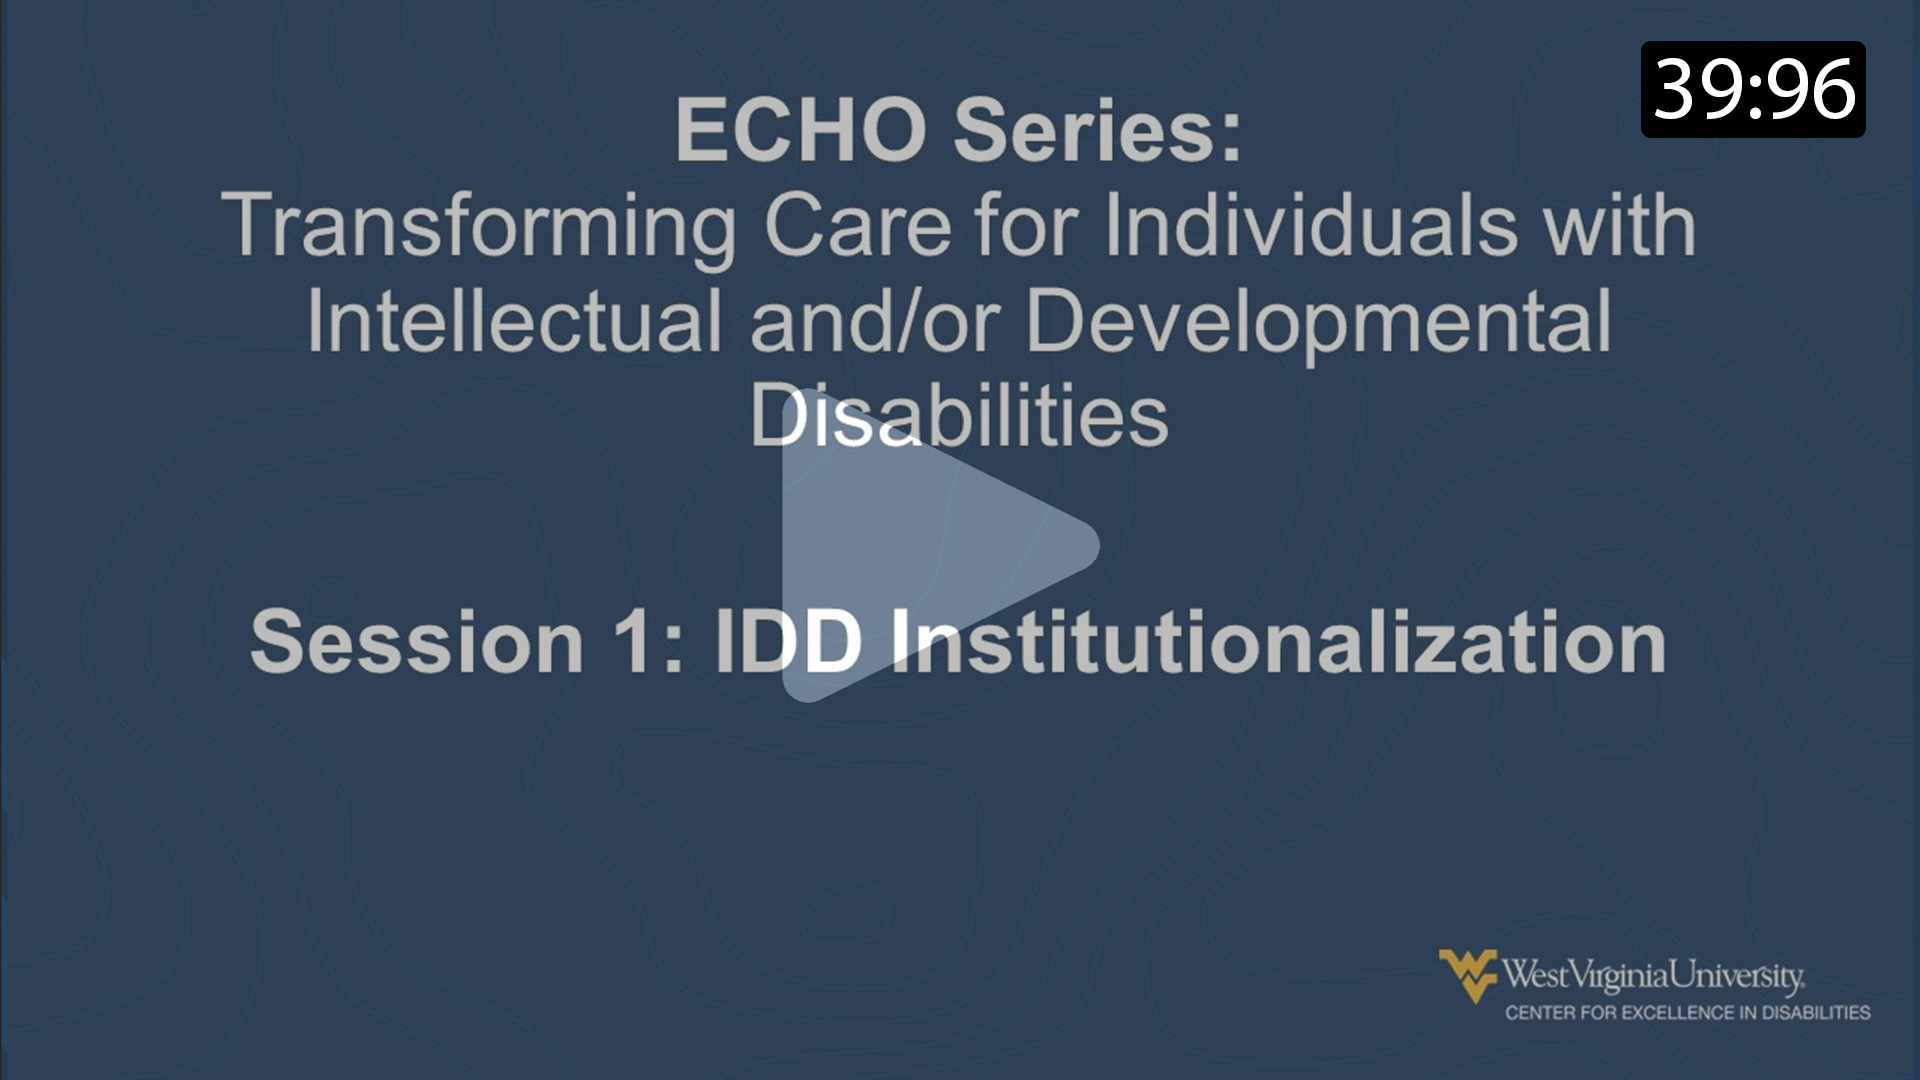 Session 1: IDD Institutionalization